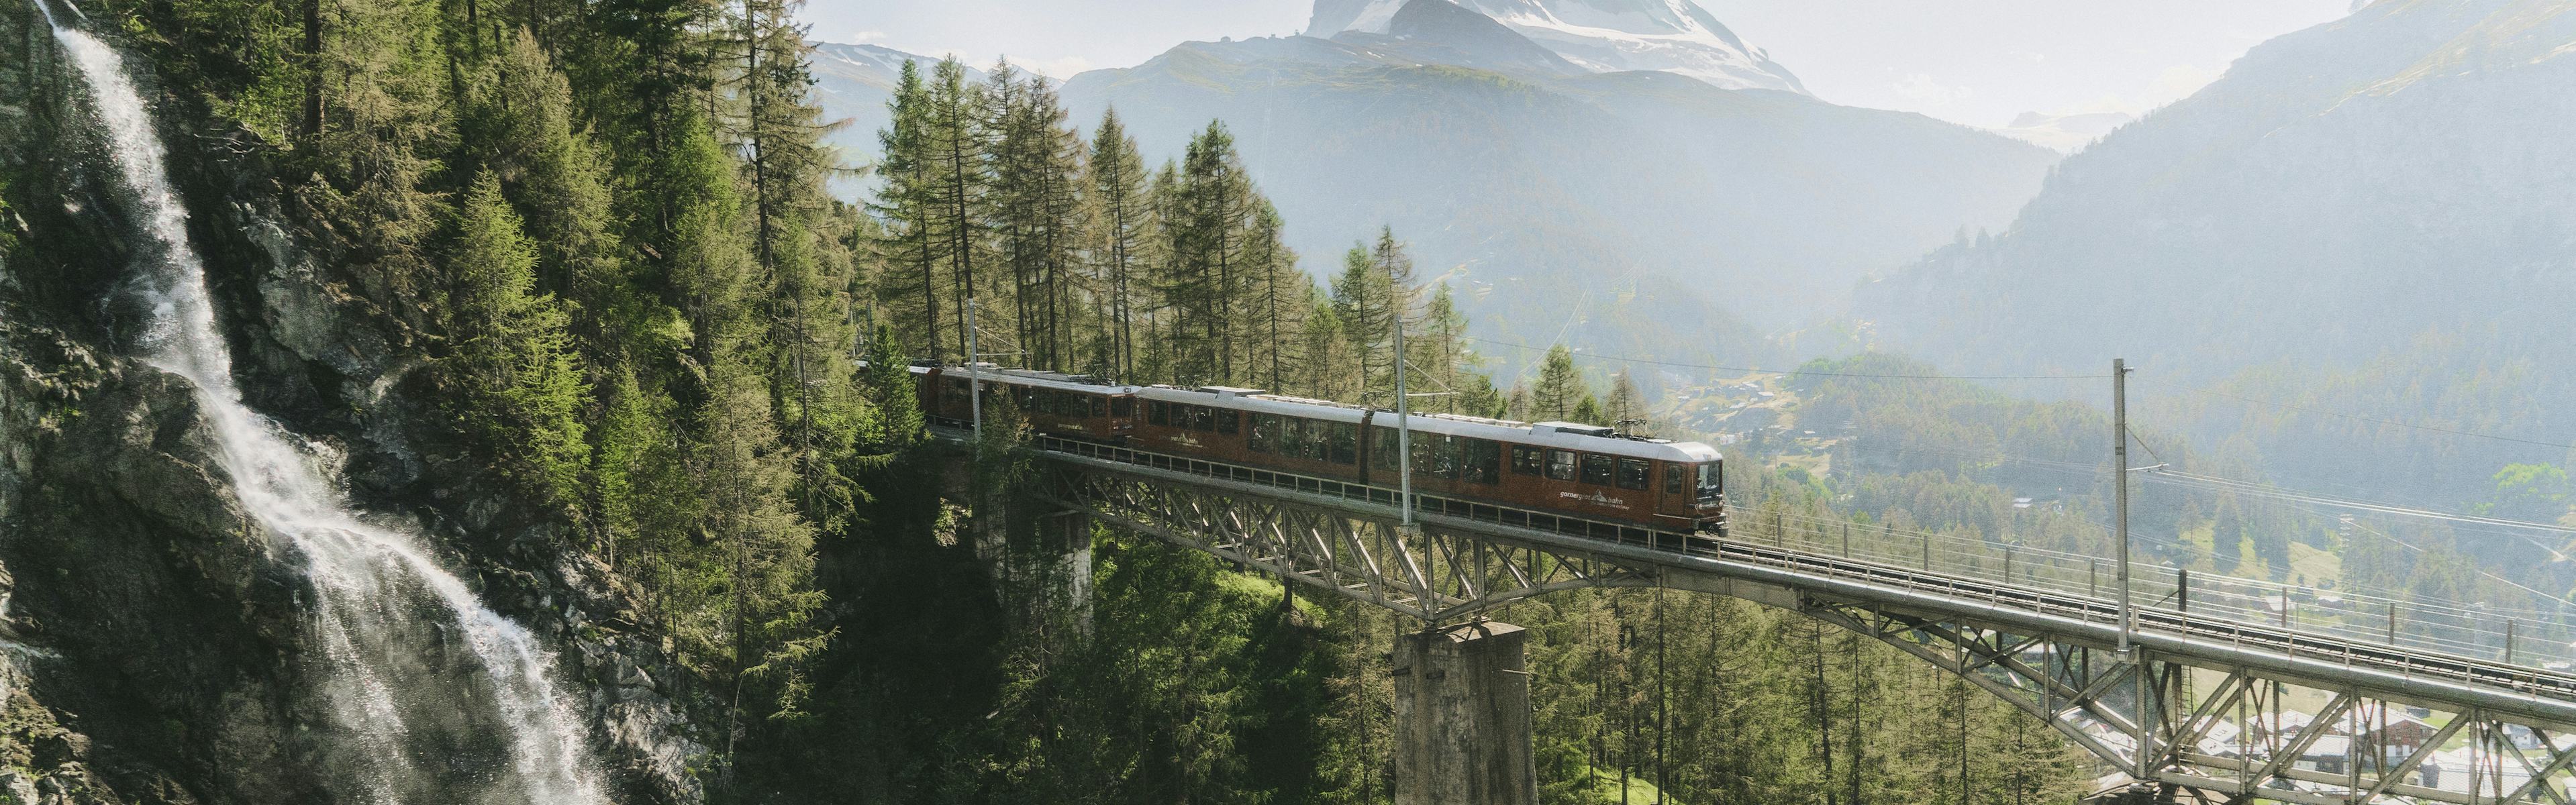 Rail journey in Europe